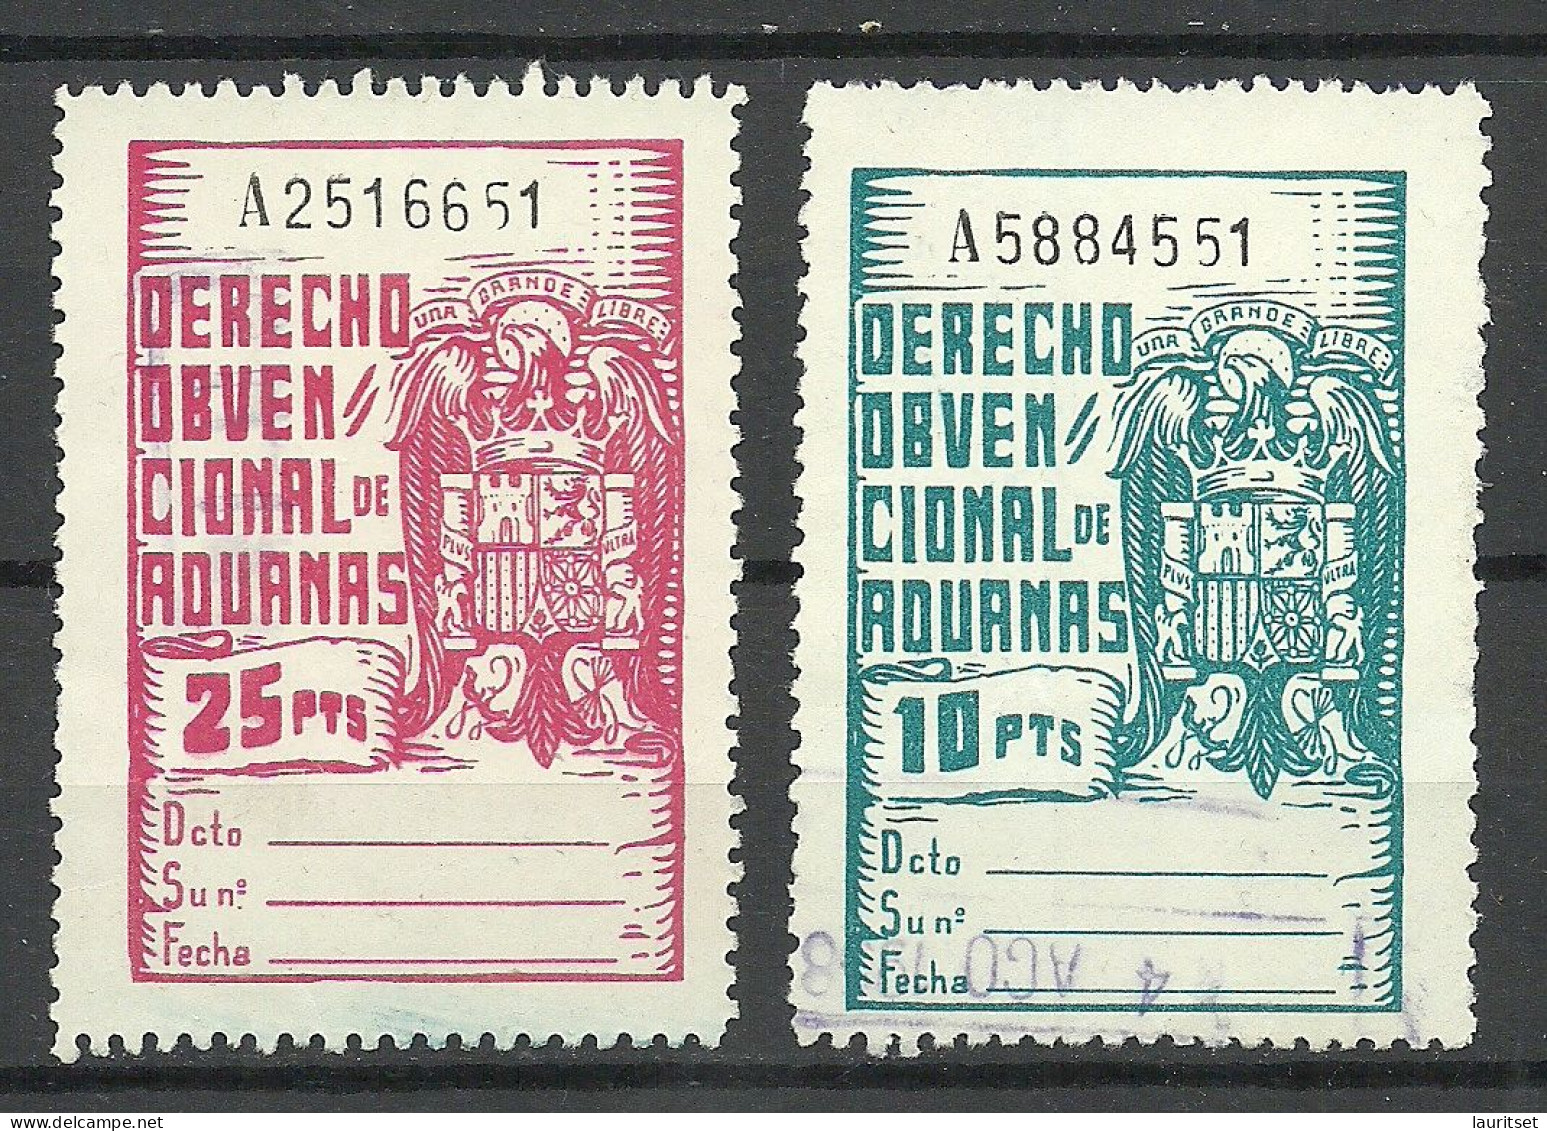 SPAIN Espana 1941 SELLOS FISCALES DERECHO OBVENCIONAL ADUANAS Fiscal Tax Steuermarken O - Fiscal-postal